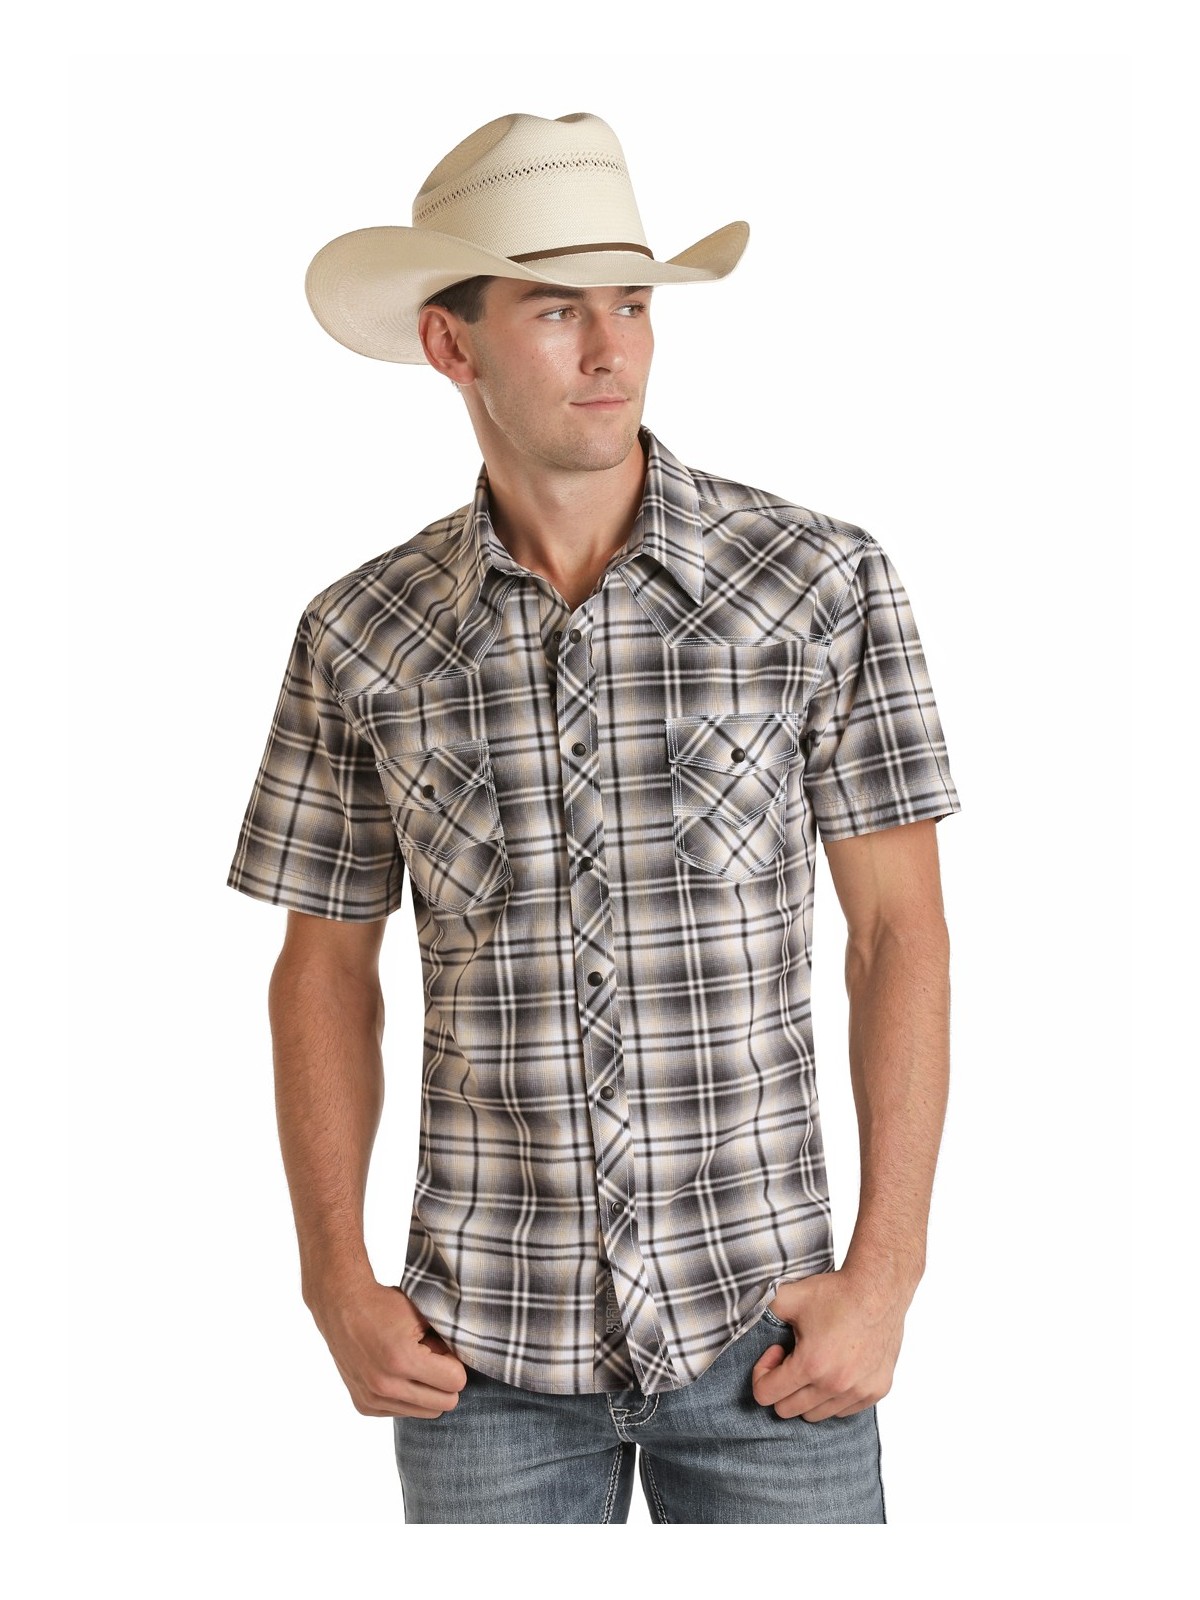 Rock'n'Roll Cowboy Short Sleeve Shirt 5104